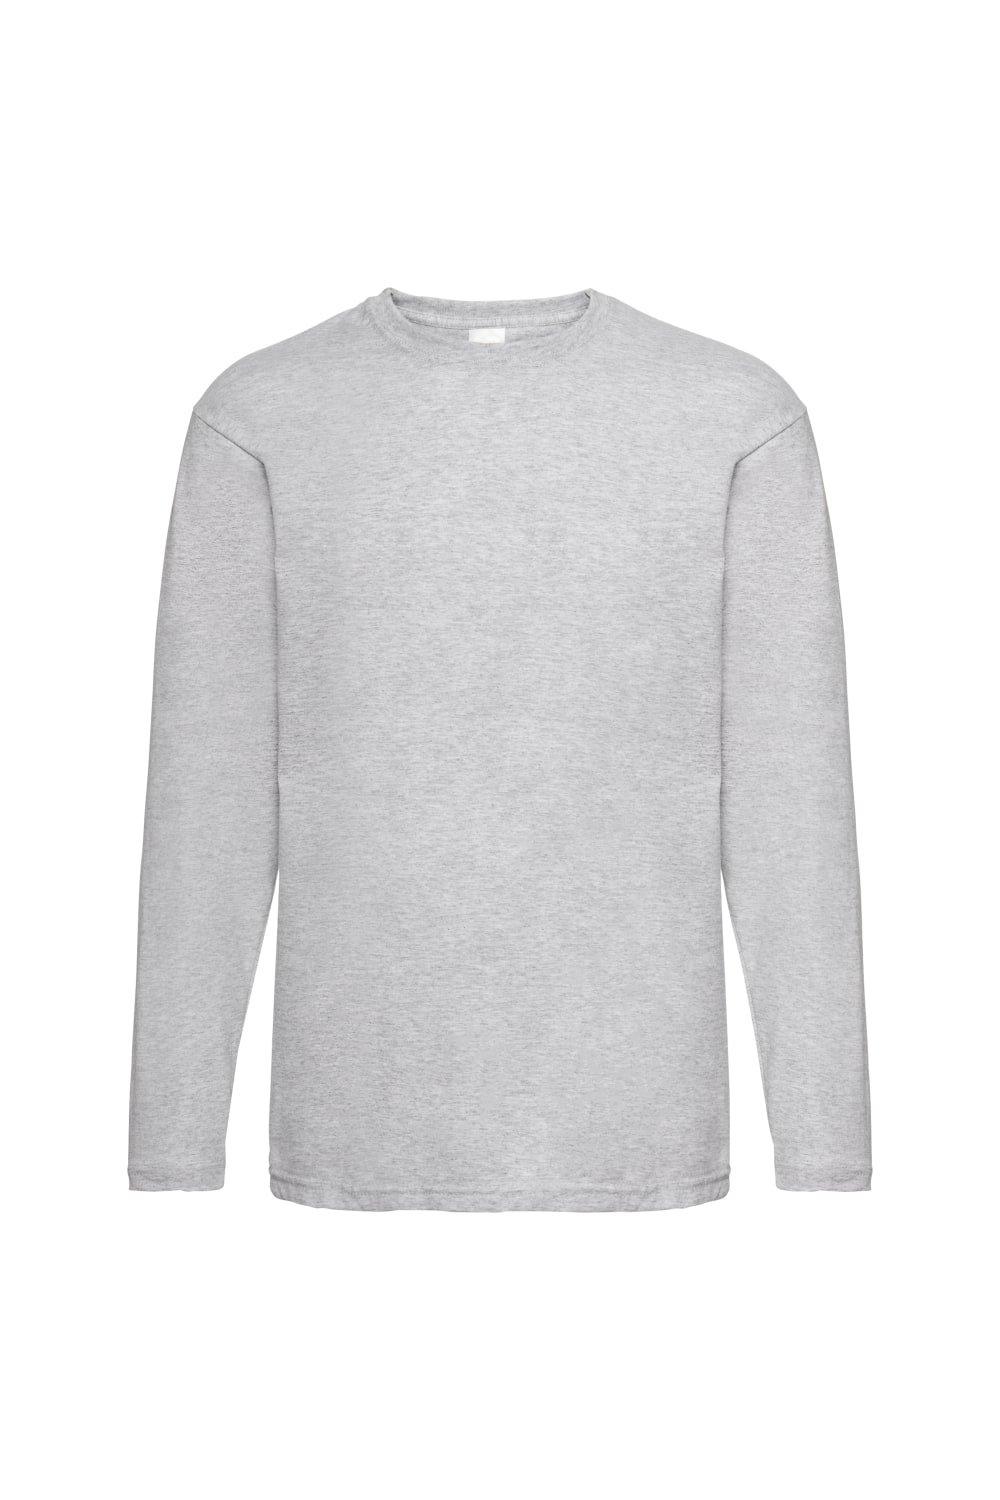 Повседневная футболка Value с длинным рукавом Universal Textiles, серый мужская футболка ретро кассета 2xl серый меланж